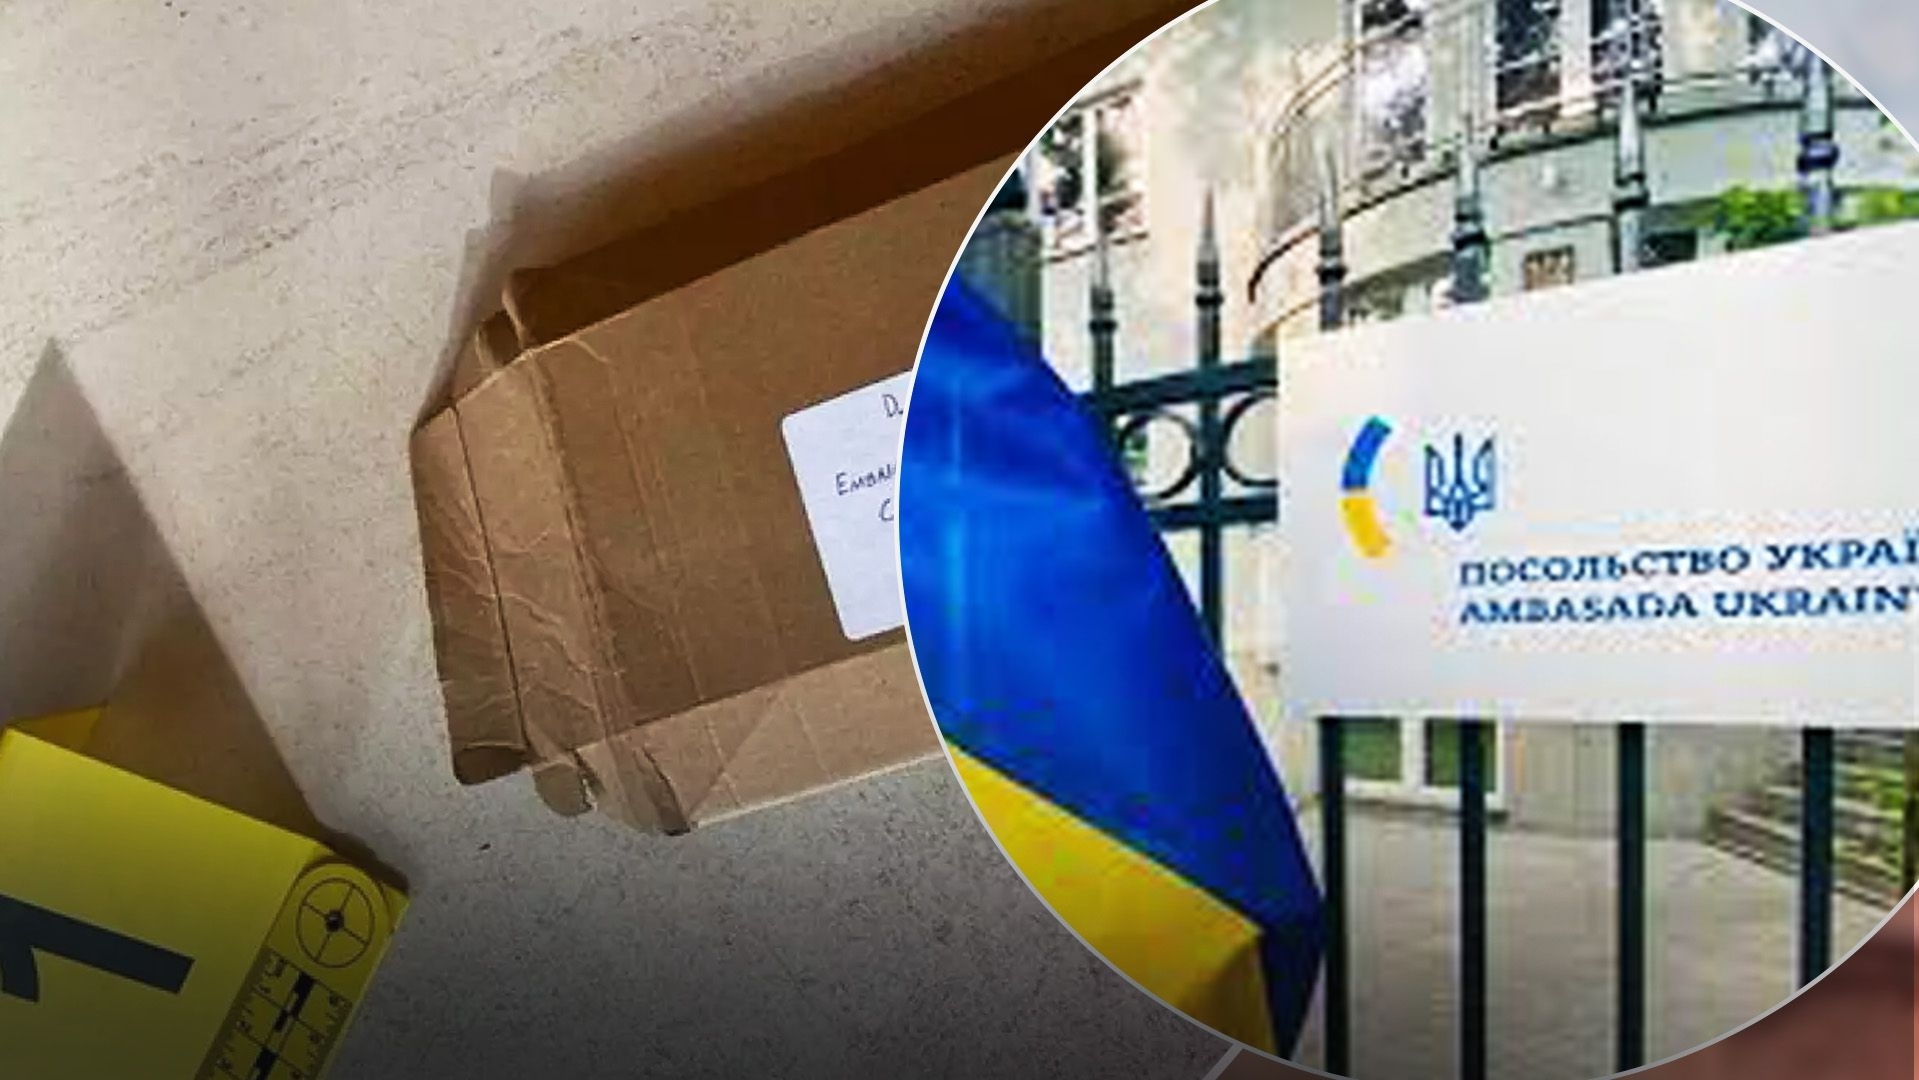 Українські посольства отримують закривавлені конверти з очами тварин